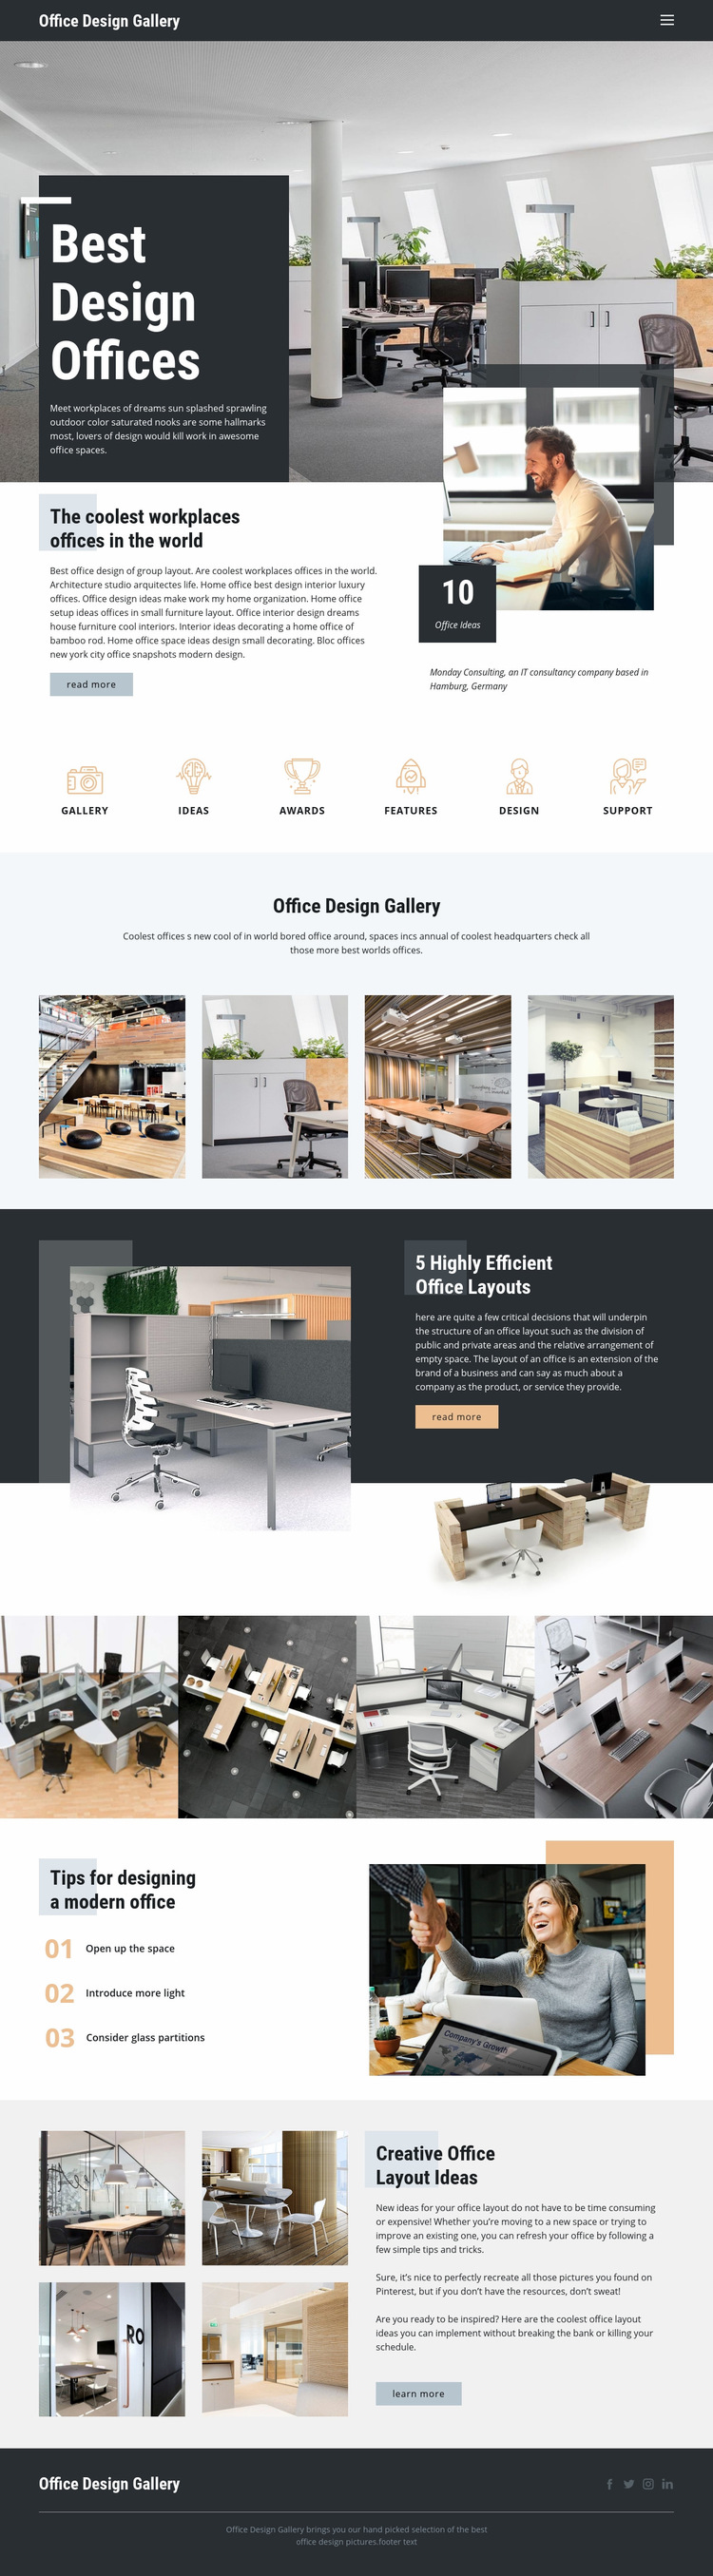 Best Design Offices Web Page Design